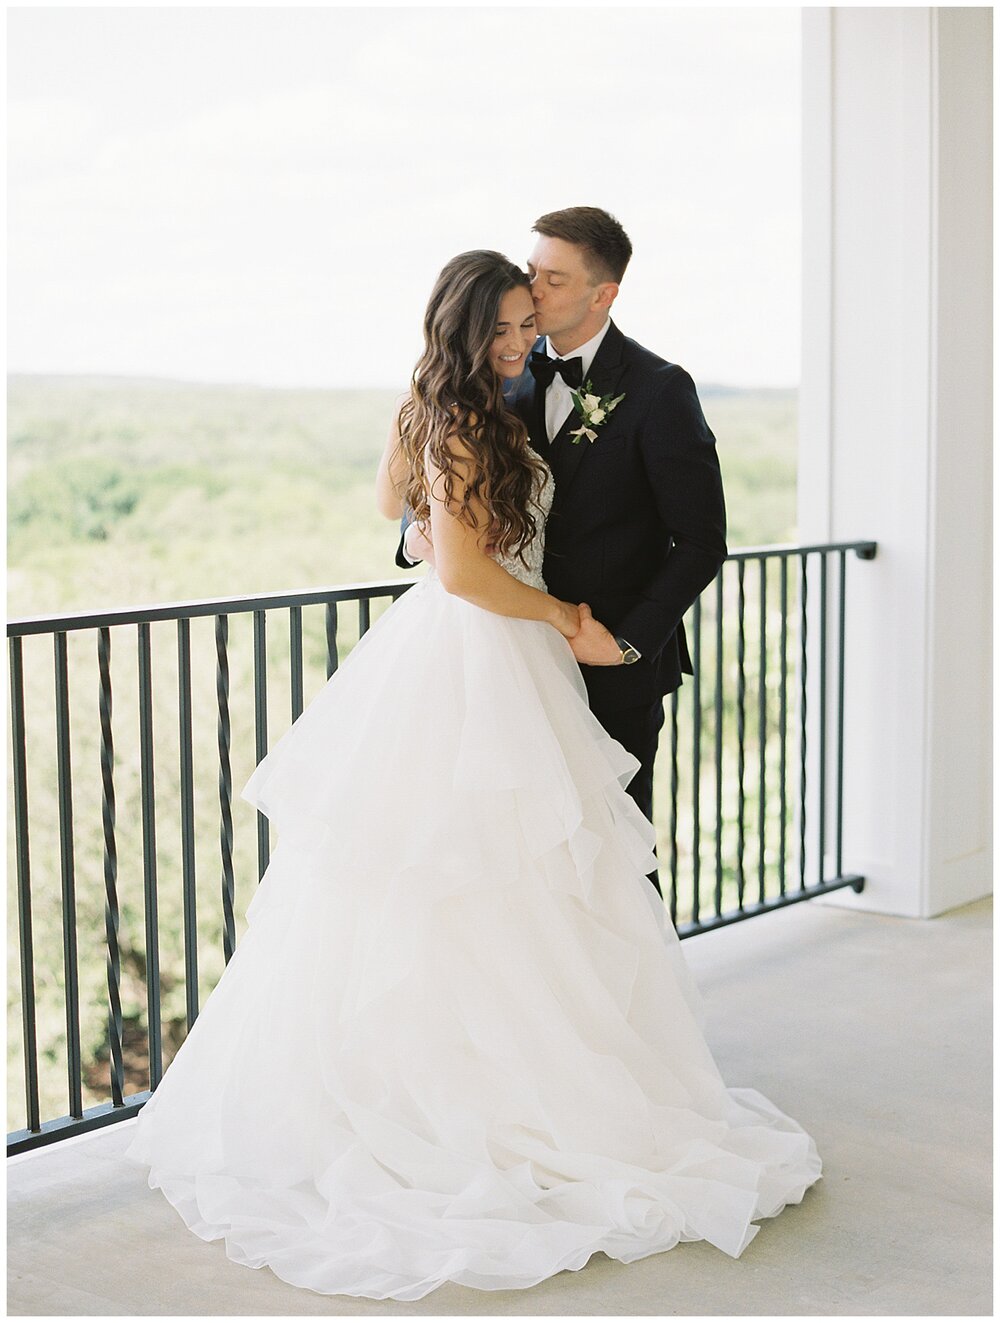 Kendall Point - Boerne TX Wedding Photography16.jpg